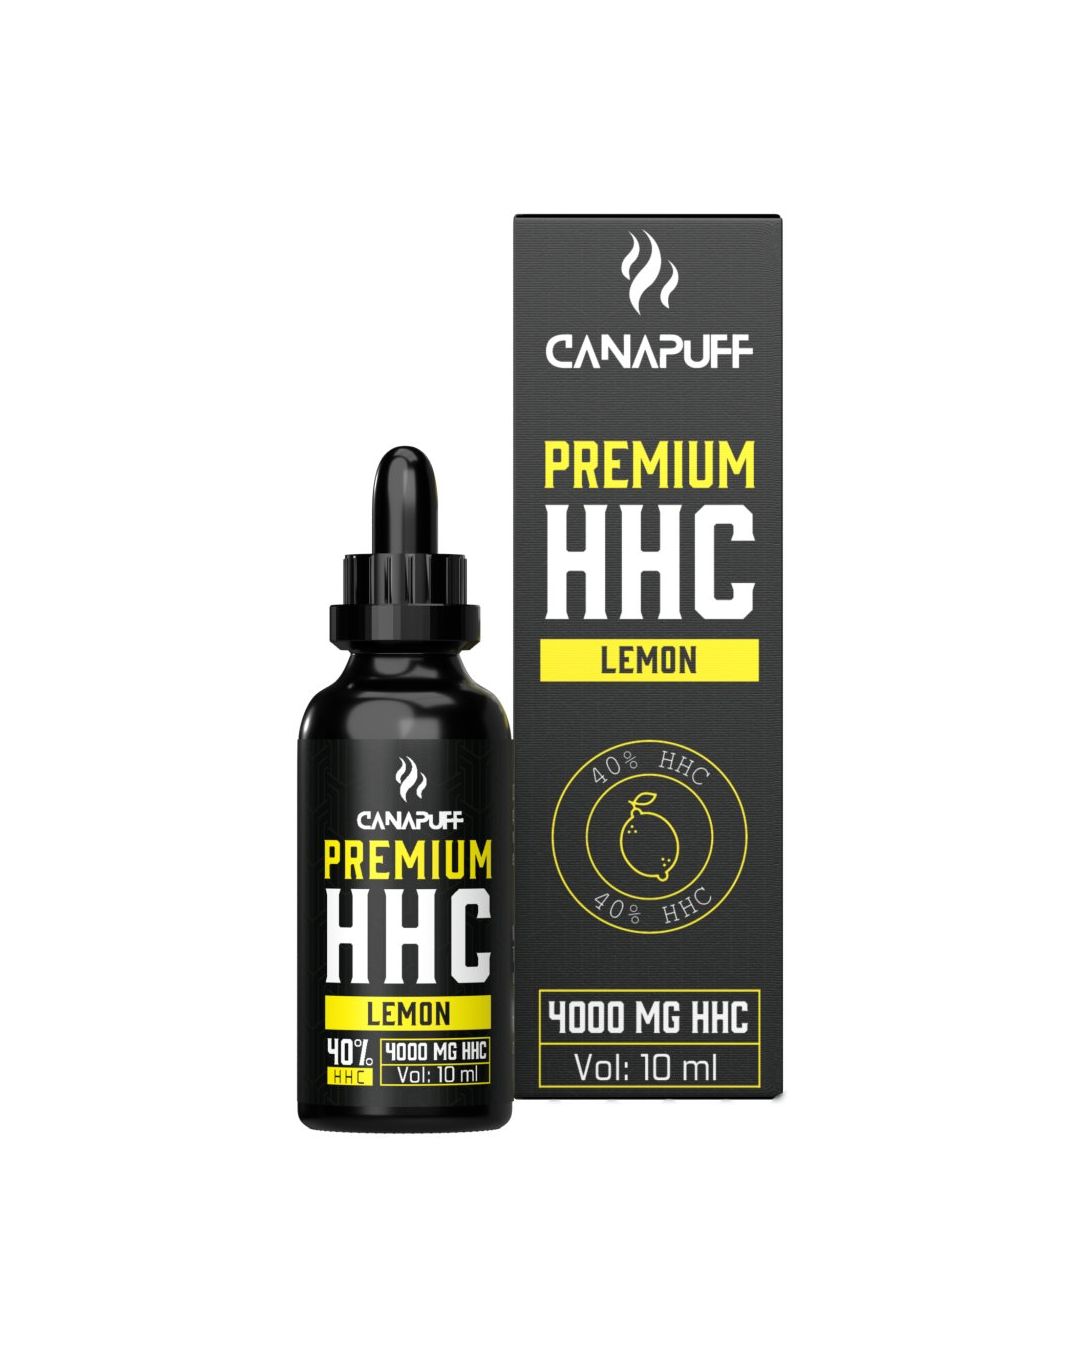 40% HHC Oil Lemon, 10ml | Canapuff